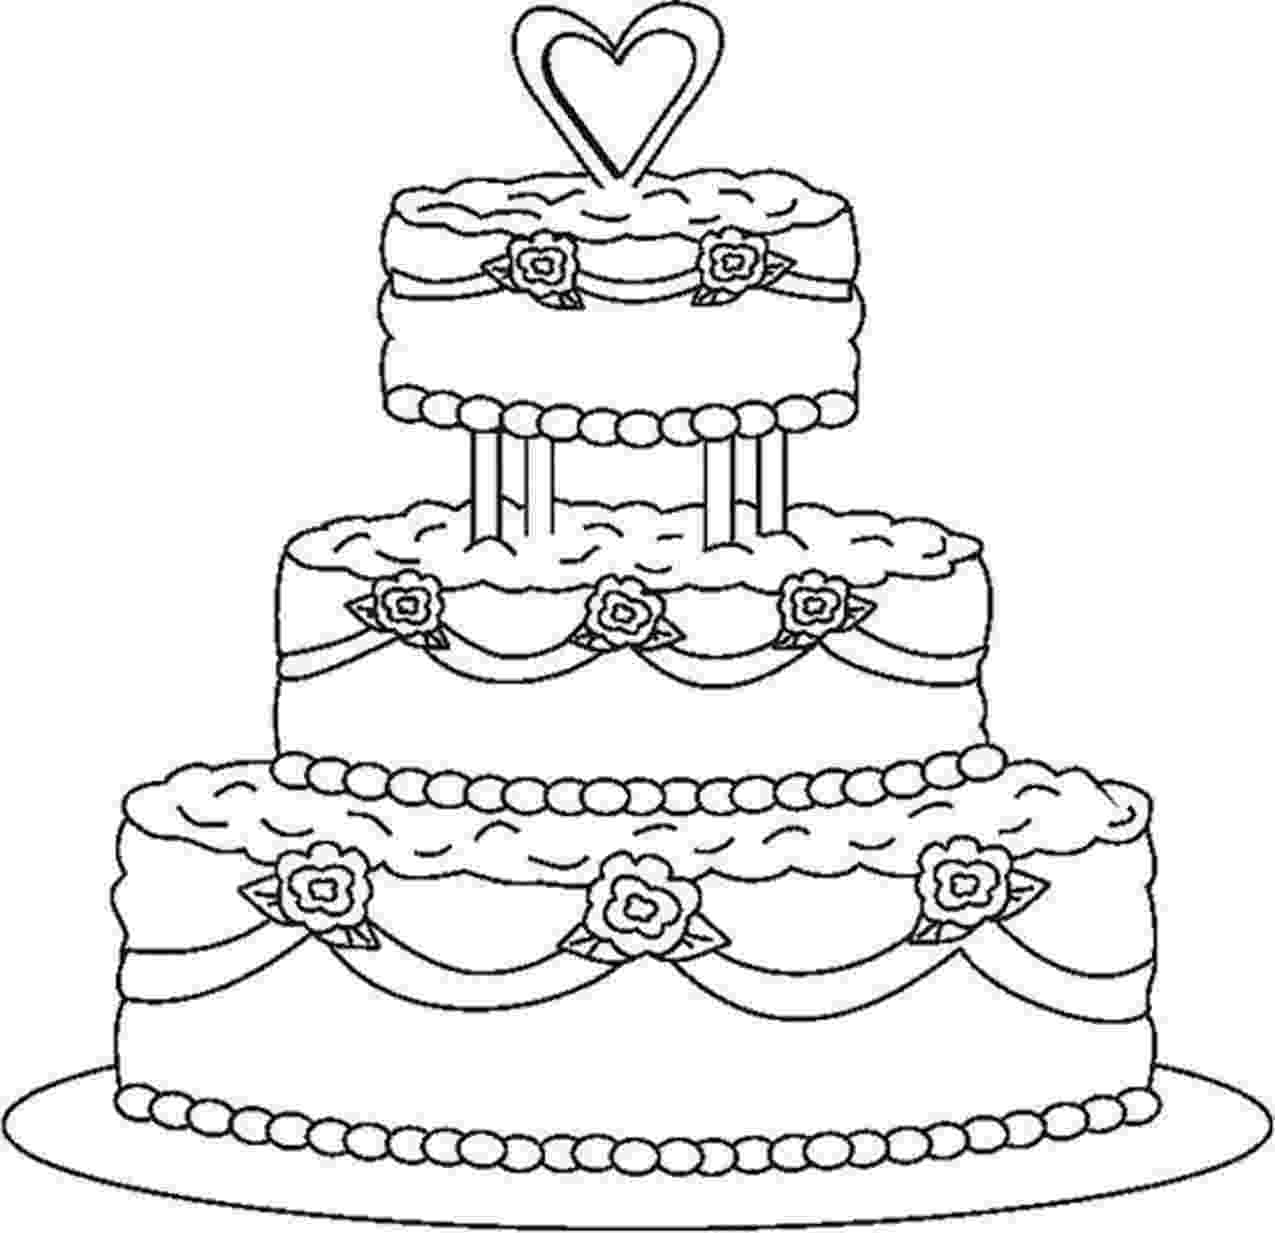 cake coloring page free printable birthday cake coloring pages for kids page coloring cake 1 2